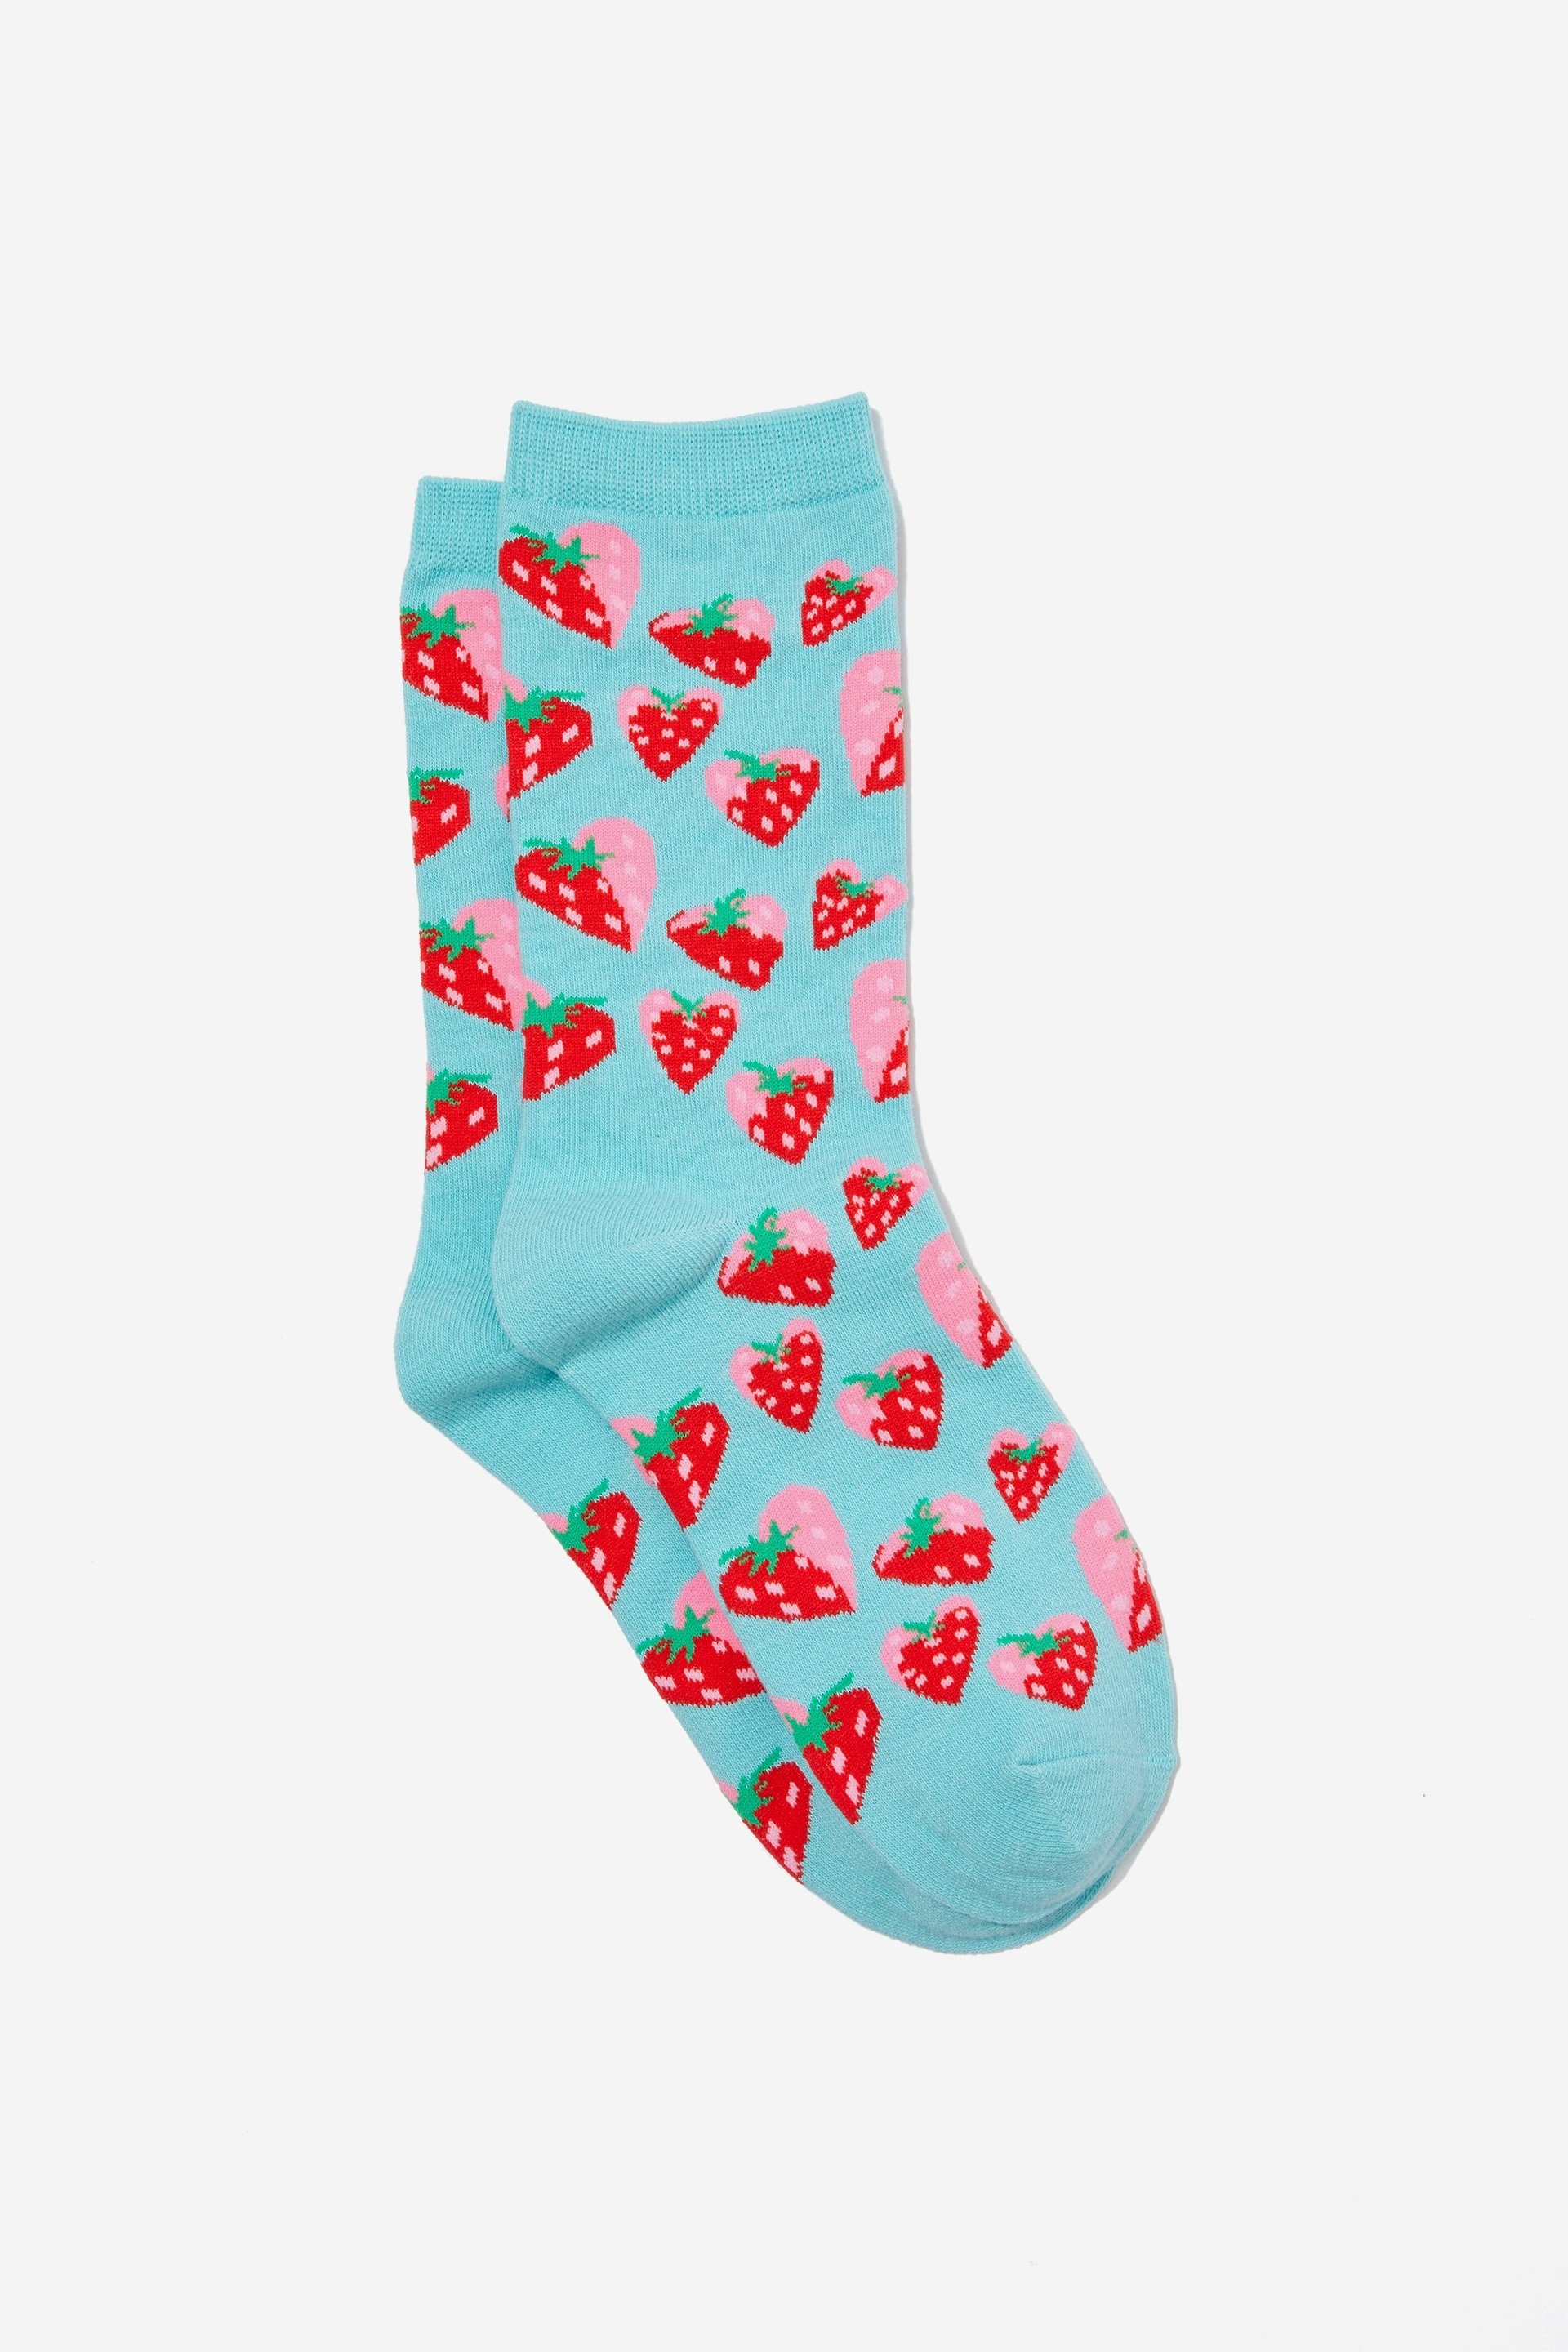 Typo - Socks - Strawberry heart blue